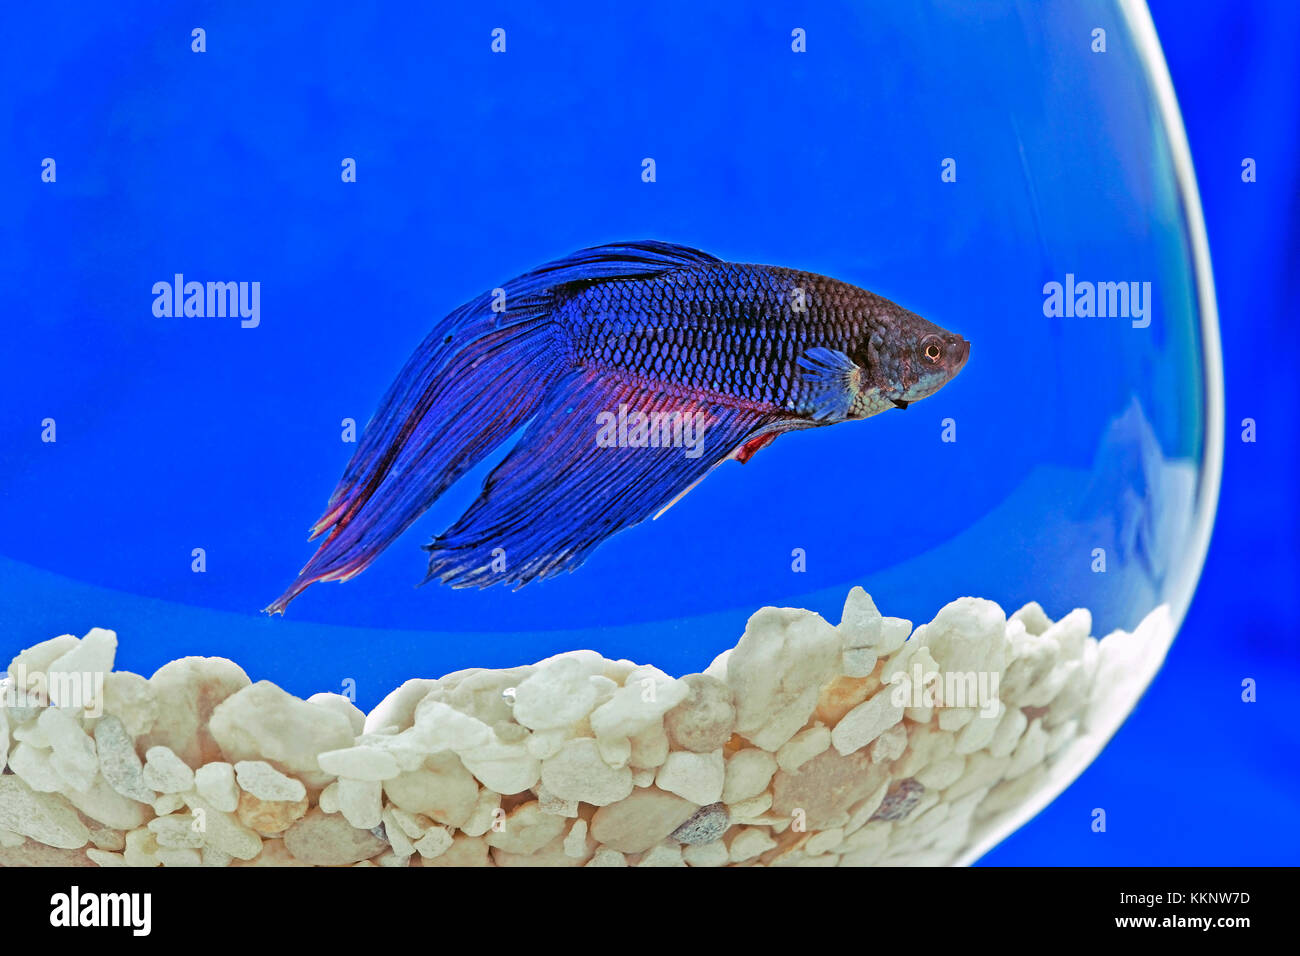 Siamese Fightingfish swimming in glass bowl Stock Photo